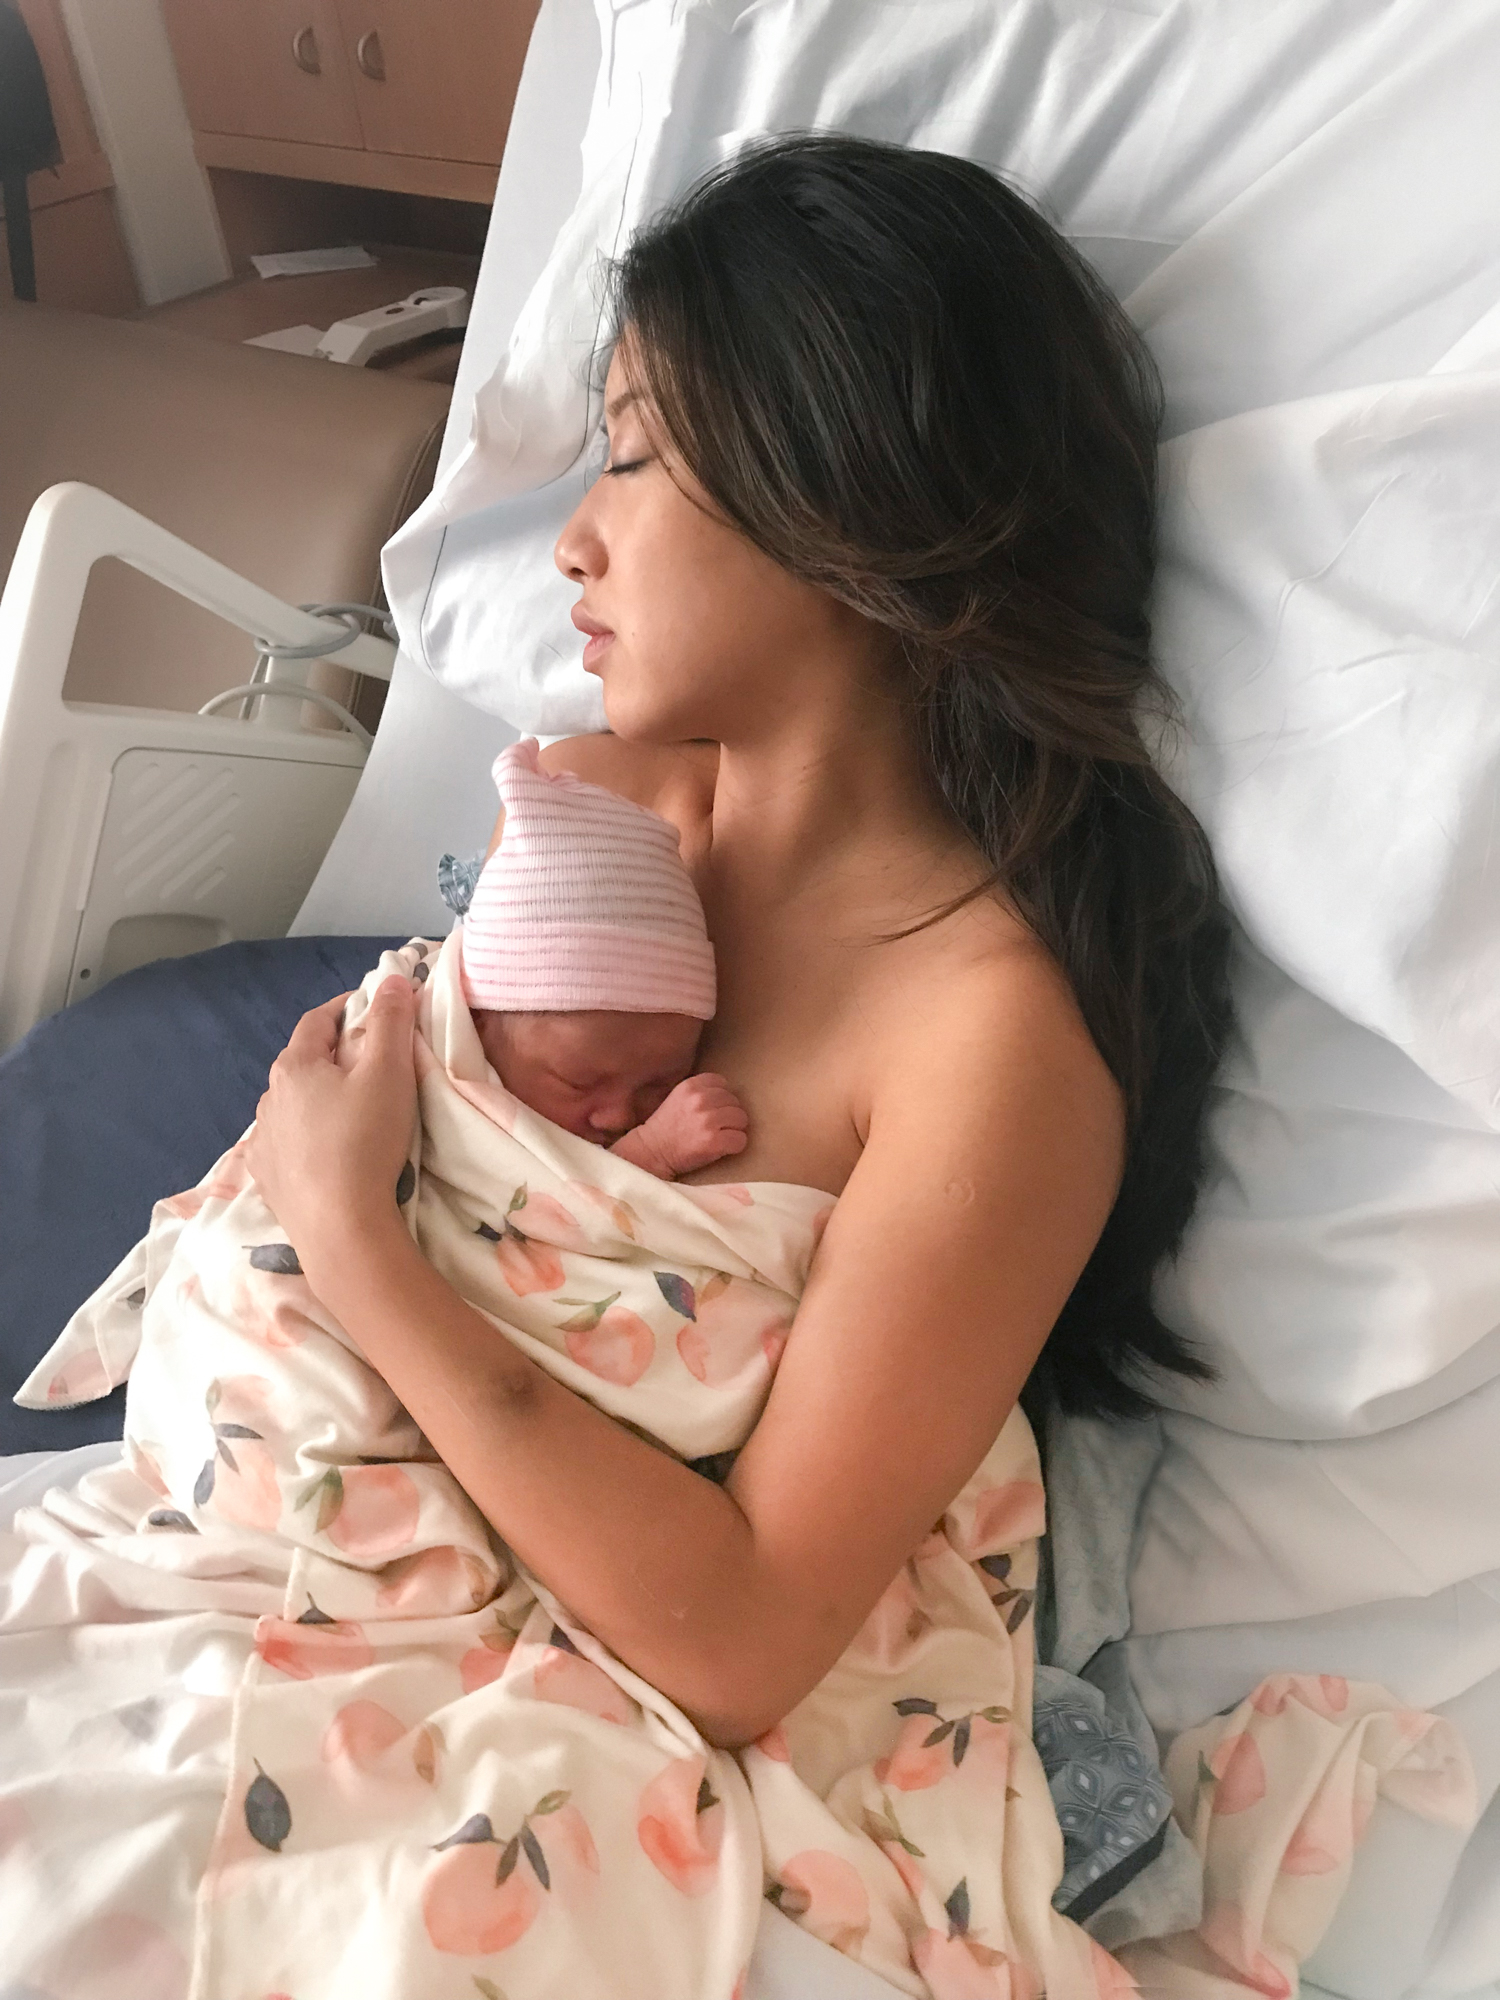 newborn baby hospital bed birth announcement